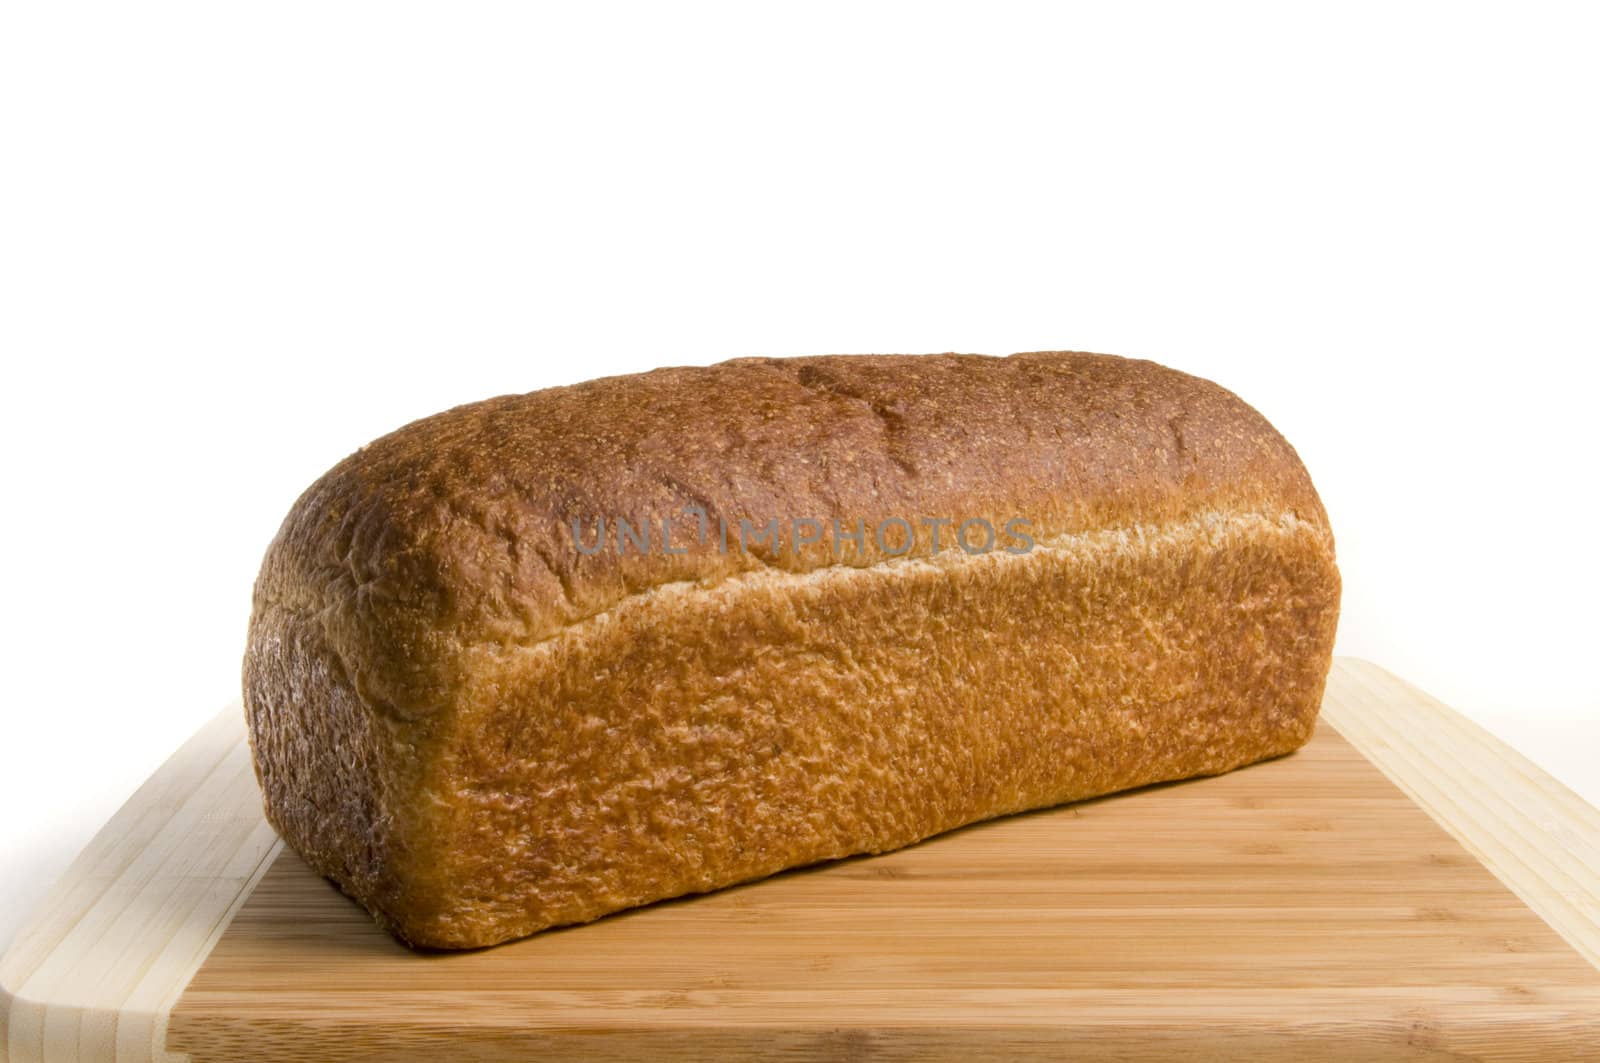 Whole-Wheat Bread by Gordo25